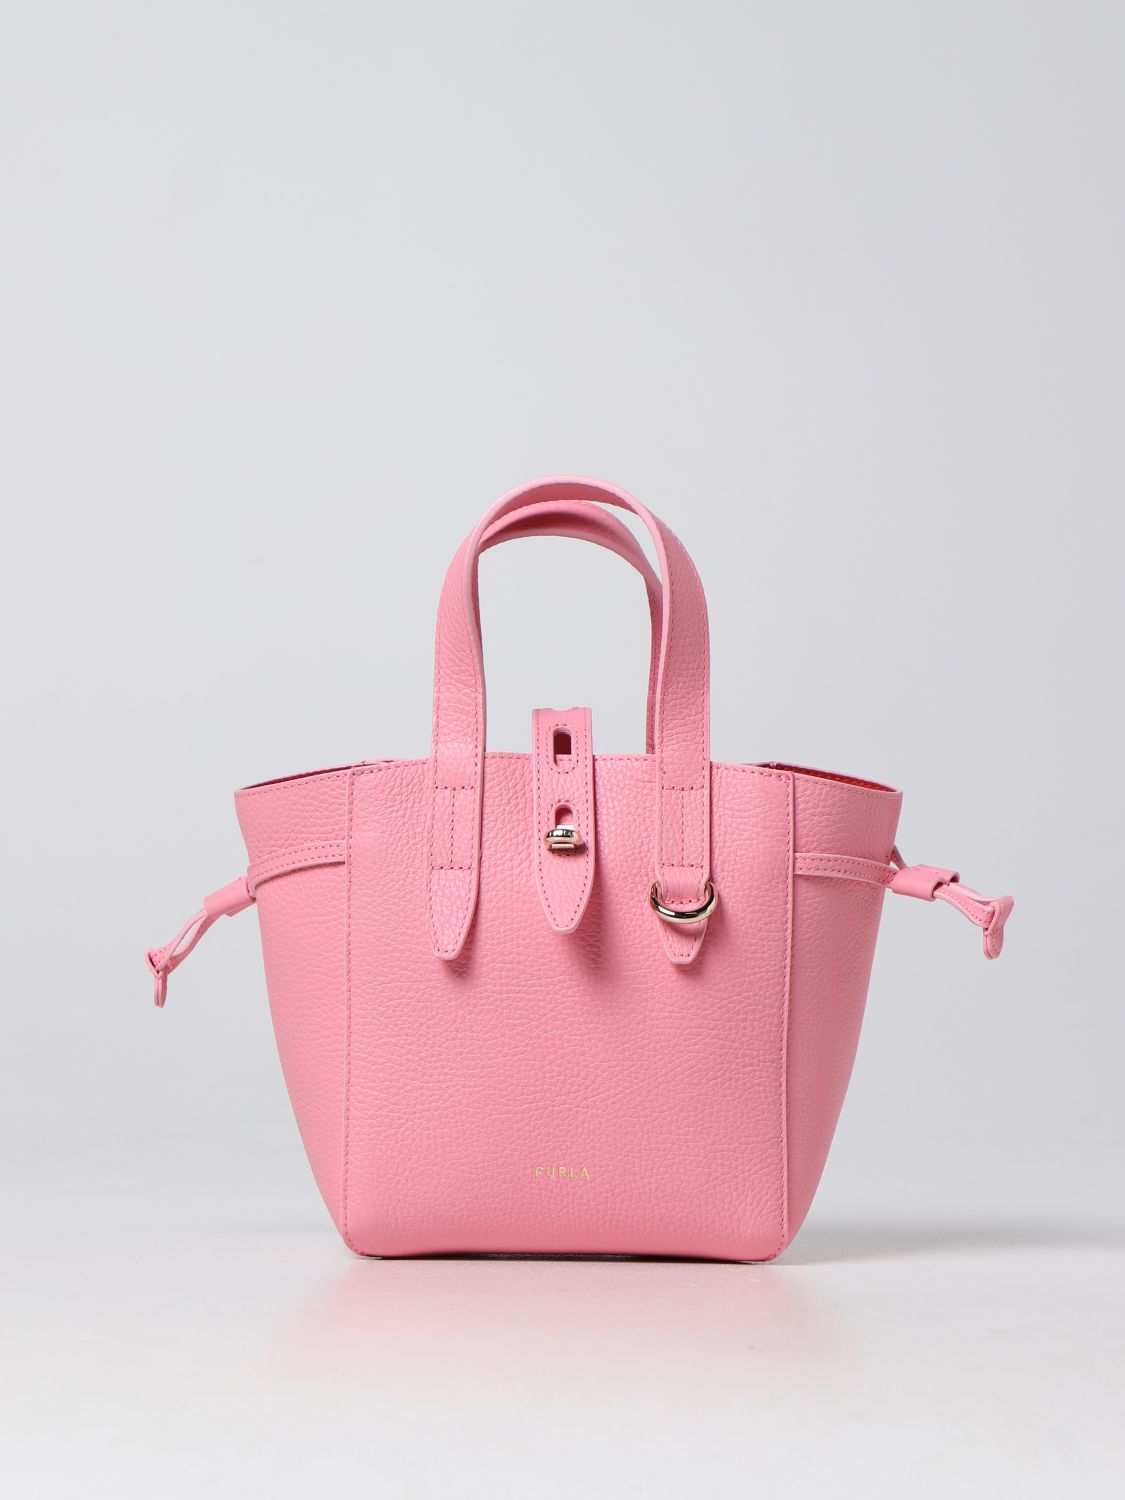 🌴 FURLA Ariana Large Tote Floral Pink / size 30.5/34 x 15.2 x 38cm /  Rp2.975.000🌴 #sholfurlabag #shoptotebag